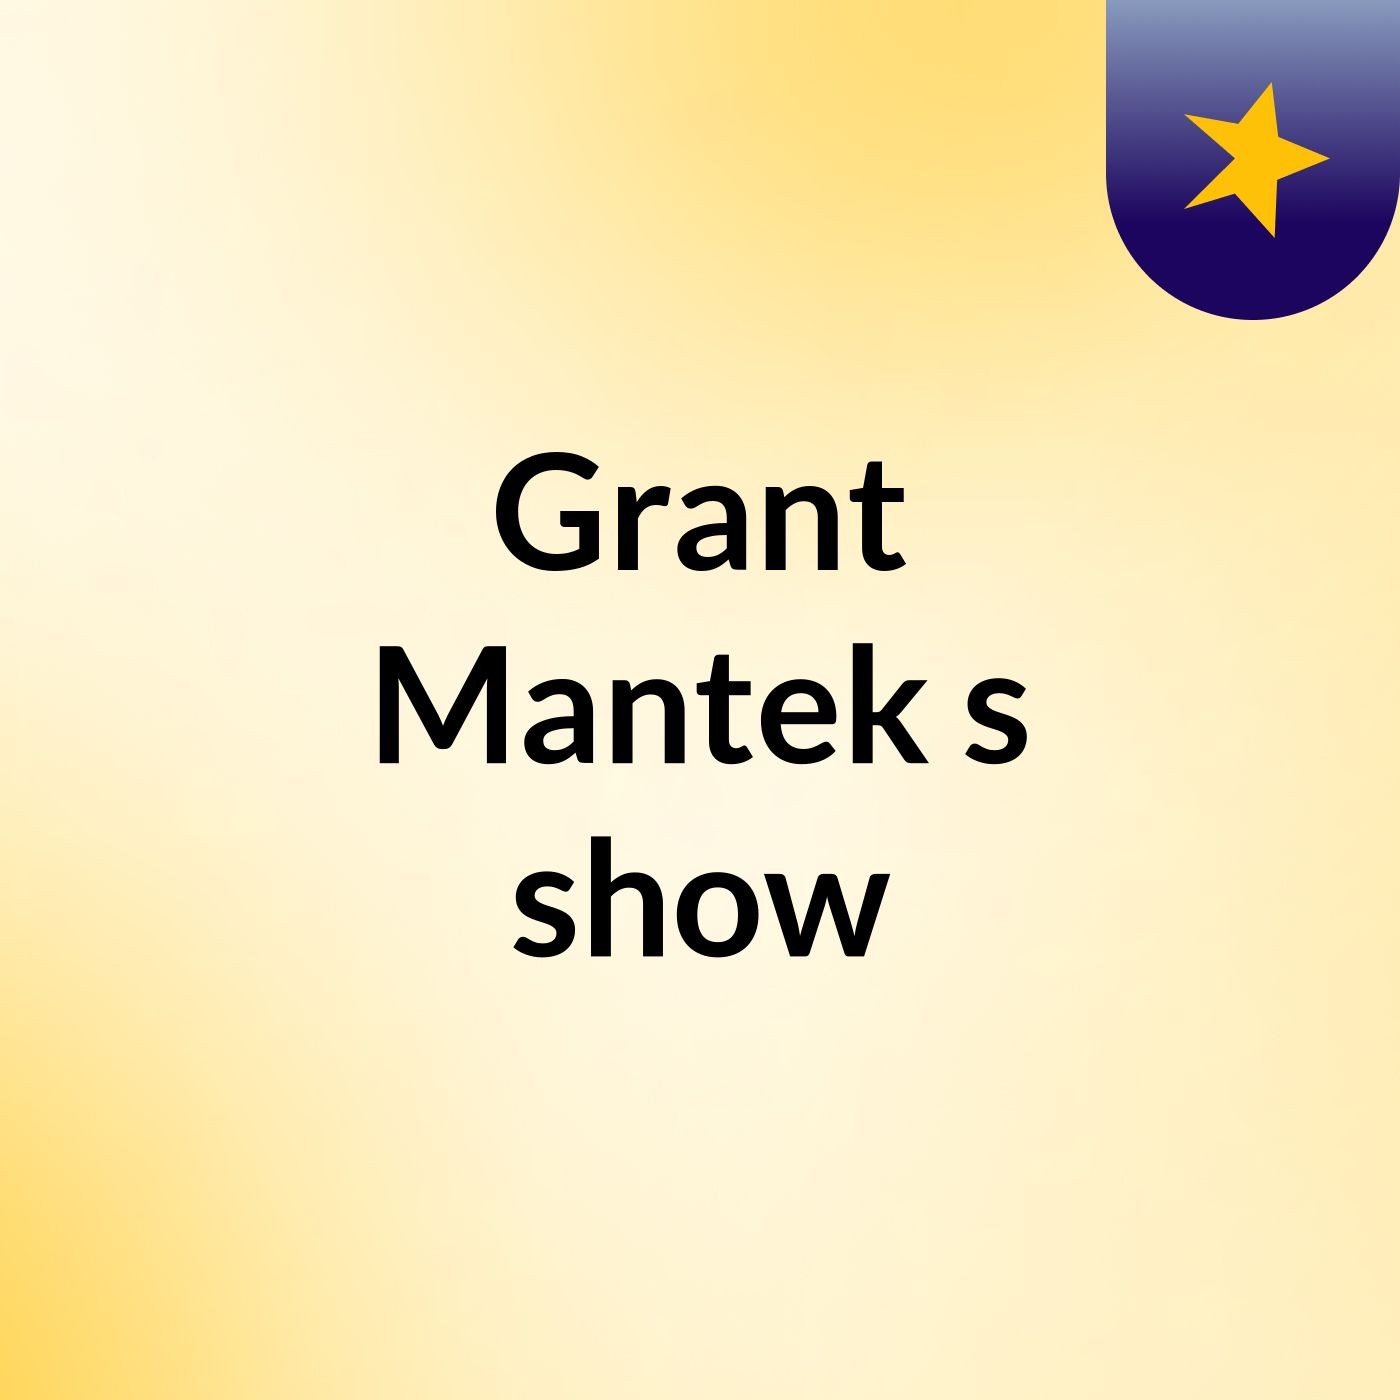 Grant Mantek's show